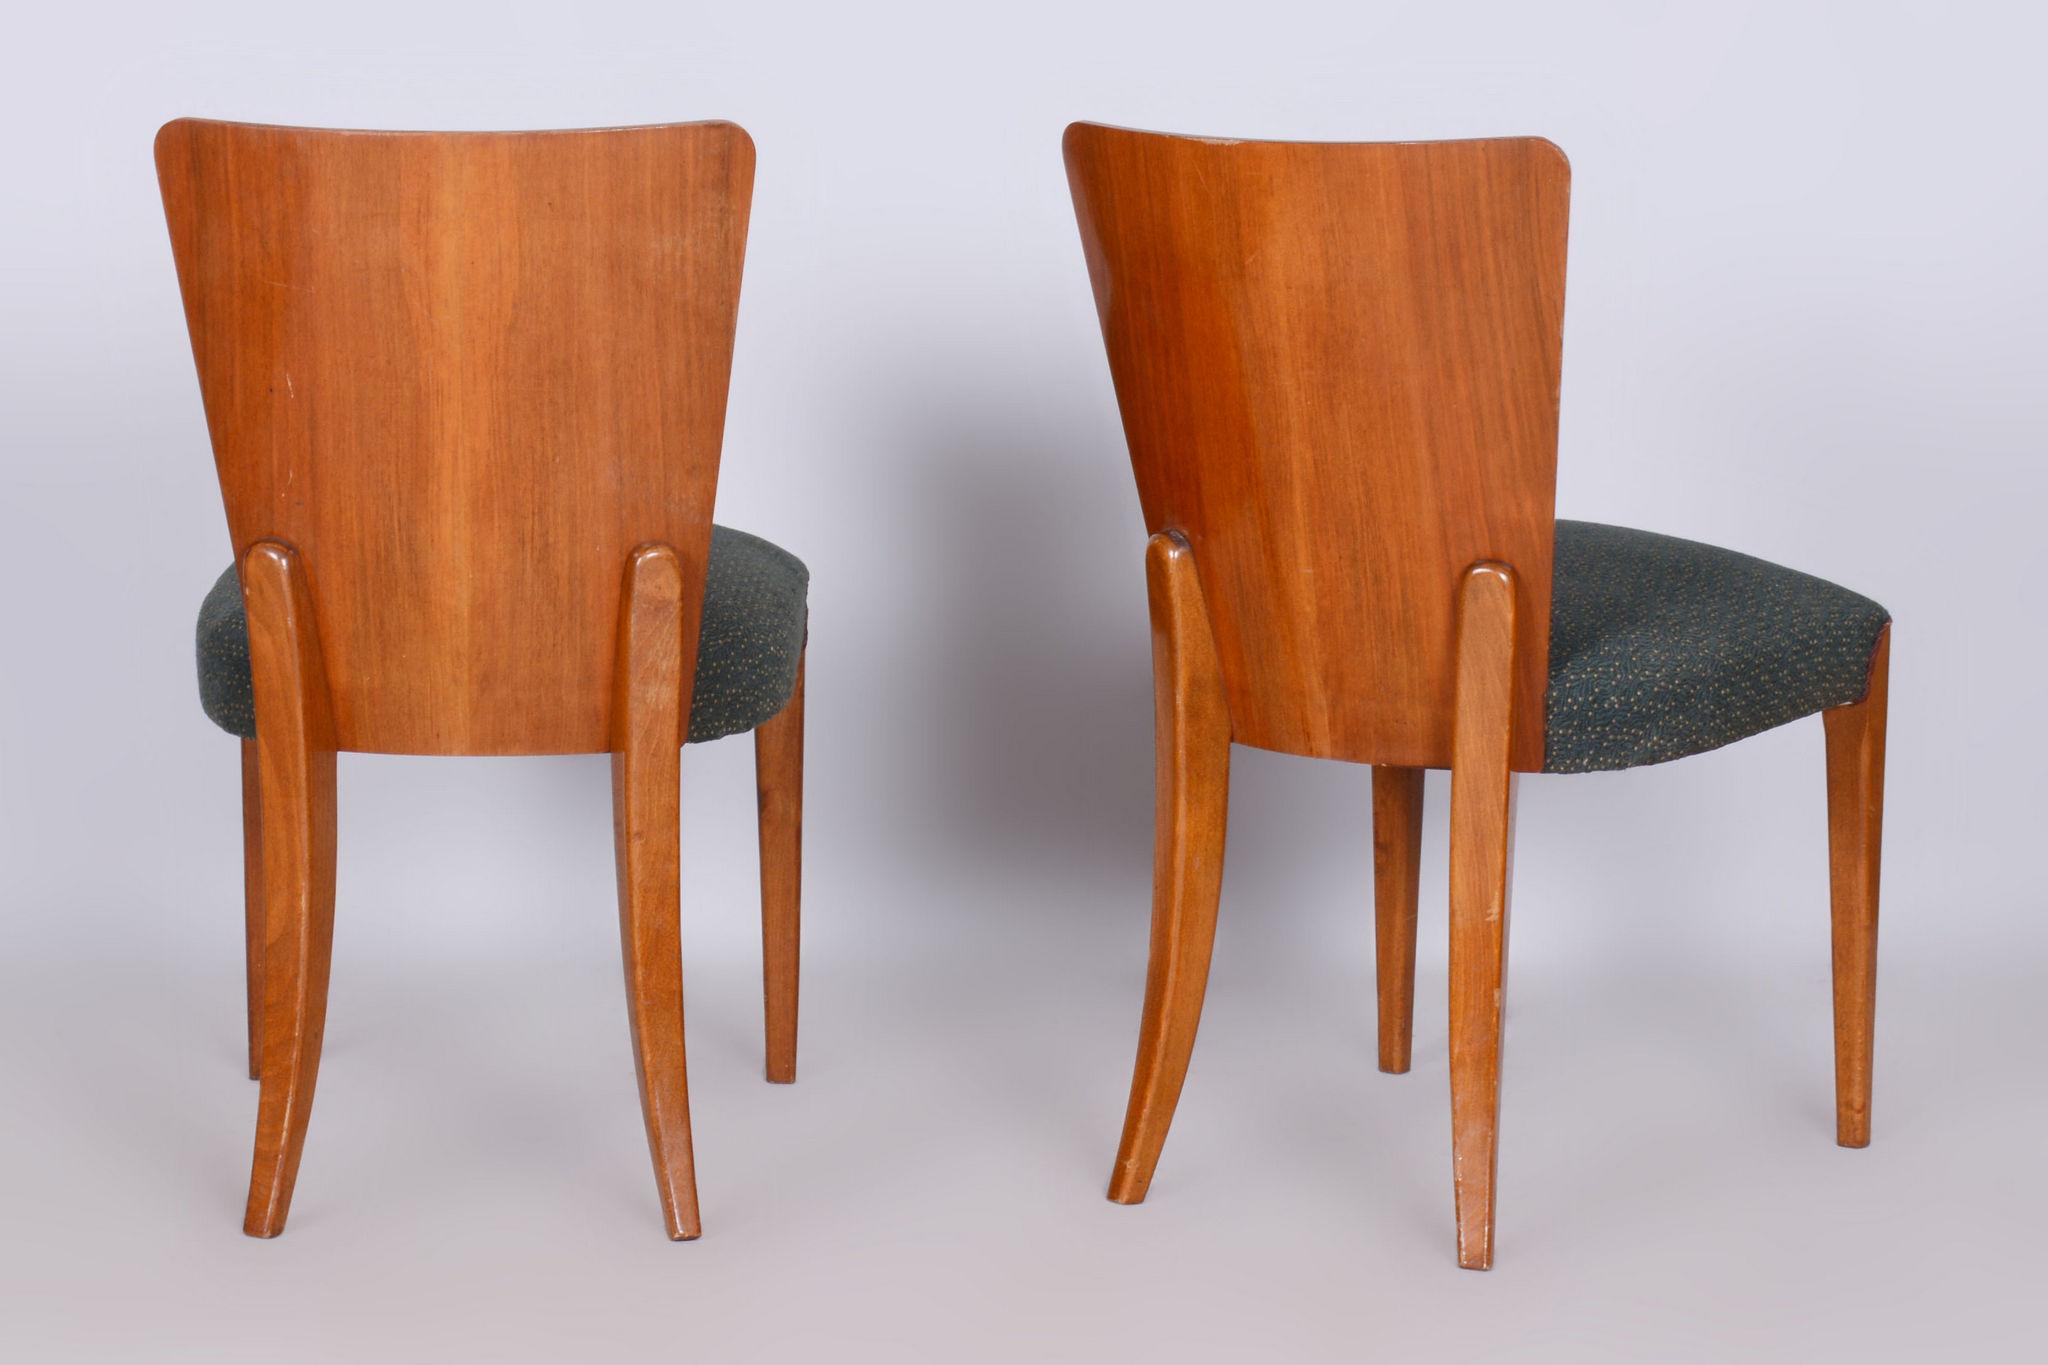 Set of Four Original ArtDeco Chairs, Halabala, UP Zavody, Beech, Czechia, 1940s In Good Condition For Sale In Horomerice, CZ